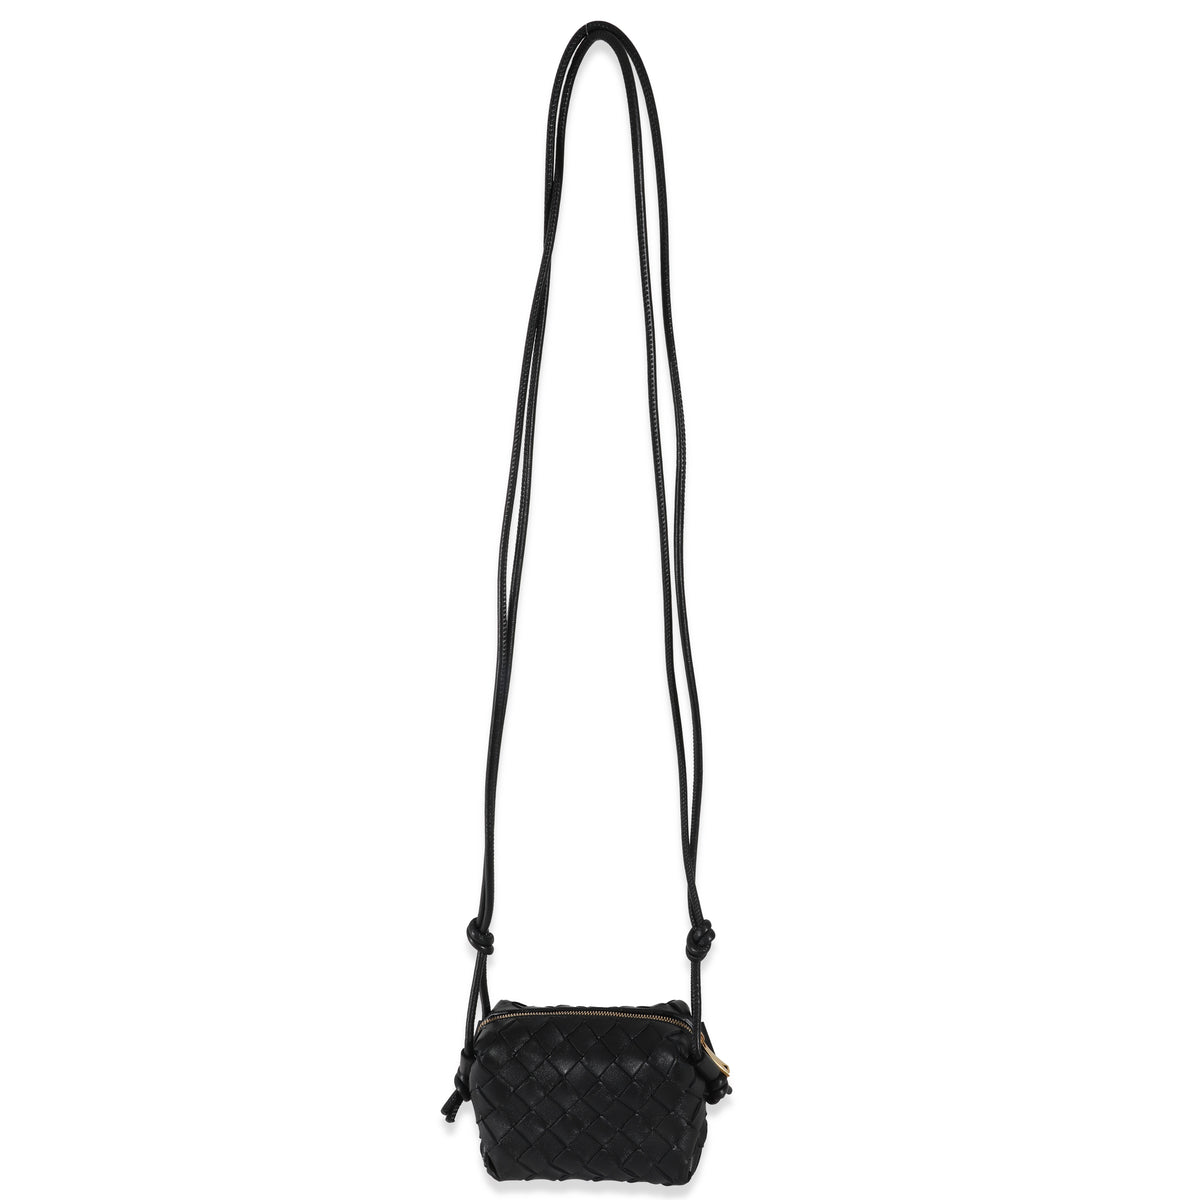 Bottega Veneta Candy Loop Leather Camera Bag in Black